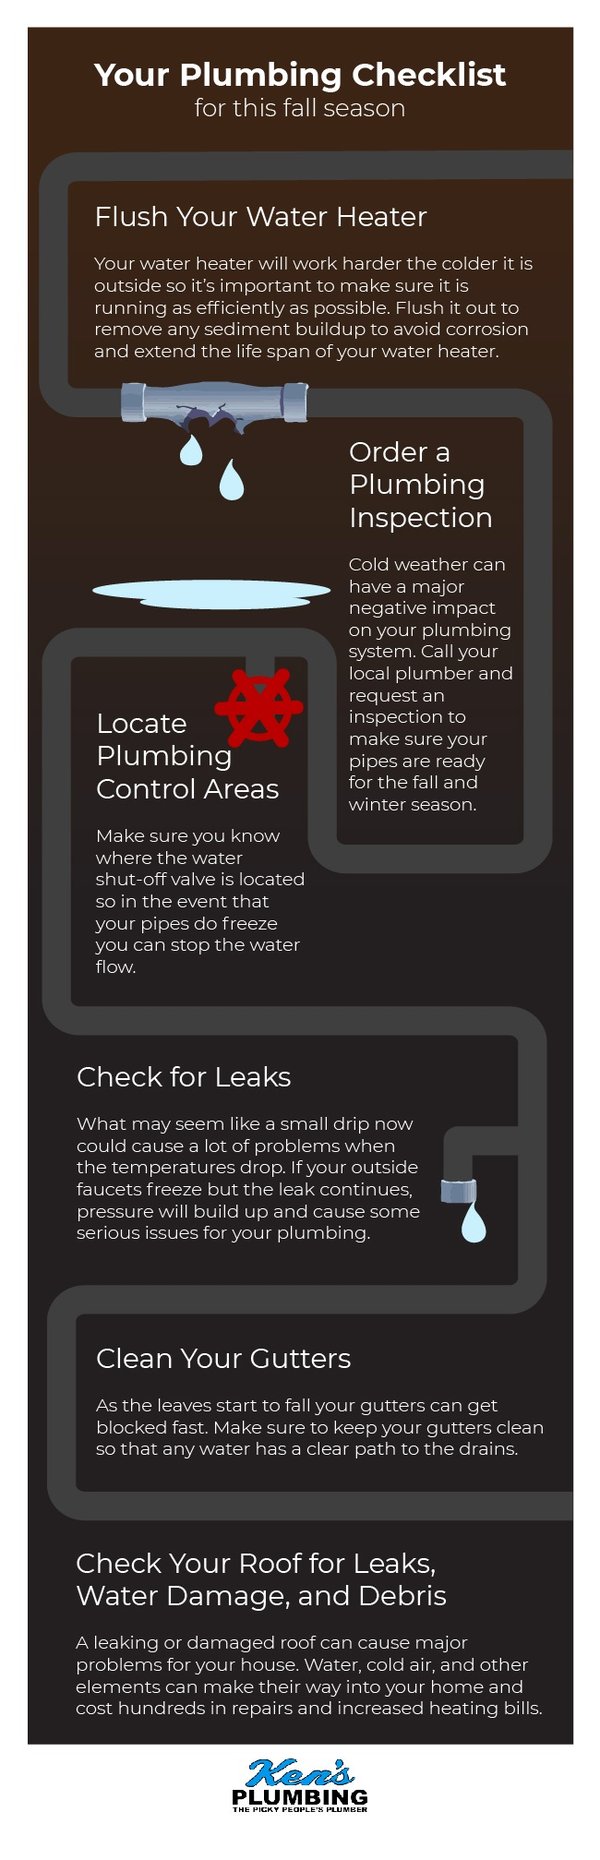 Ken's Plumbing Fall Checklist